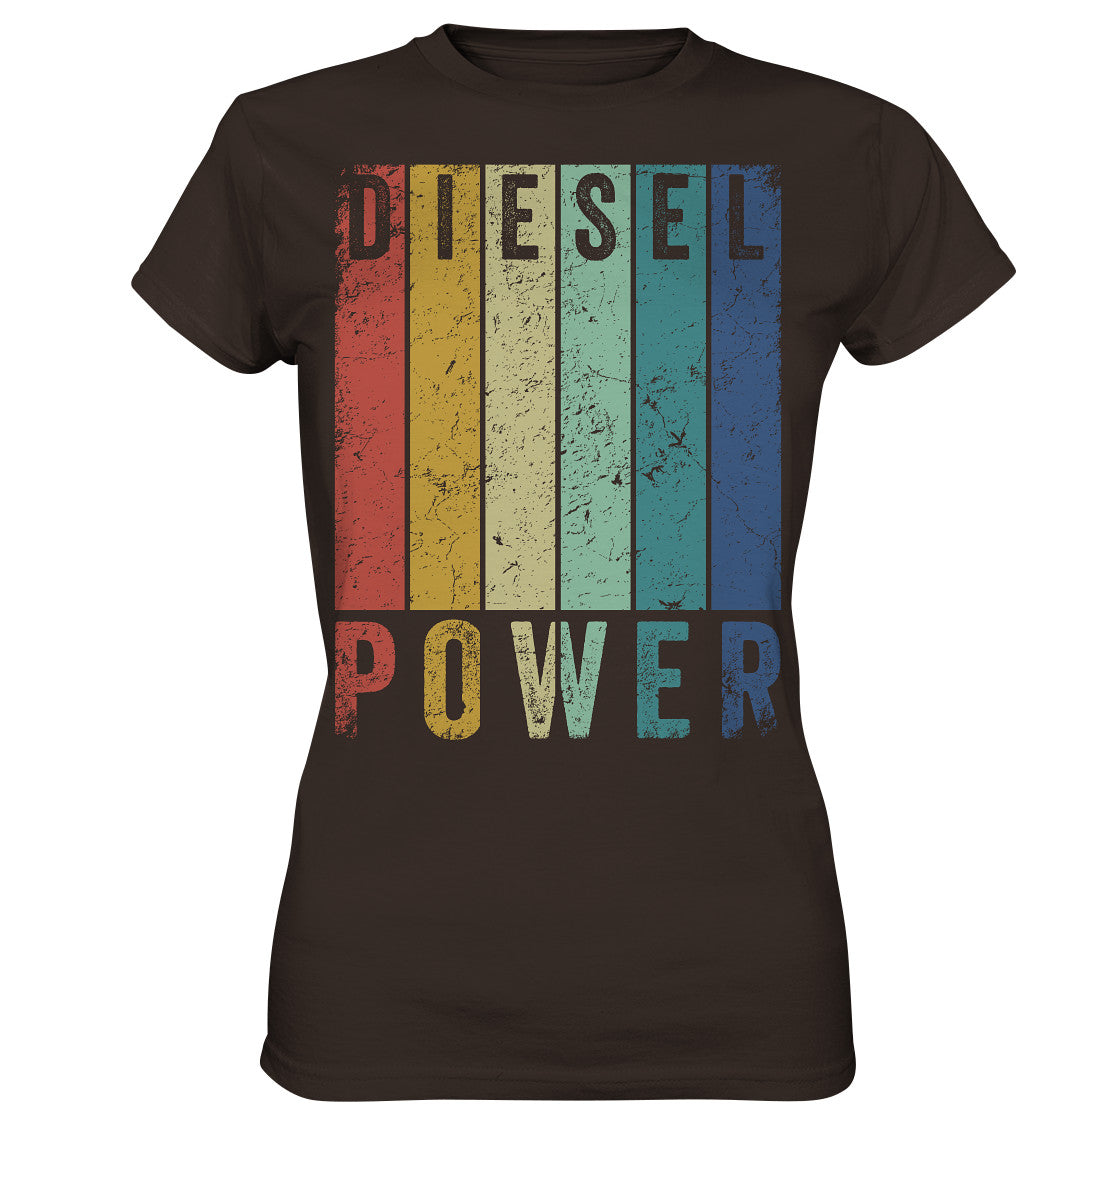 Diesel Power - Ladies Premium Shirt